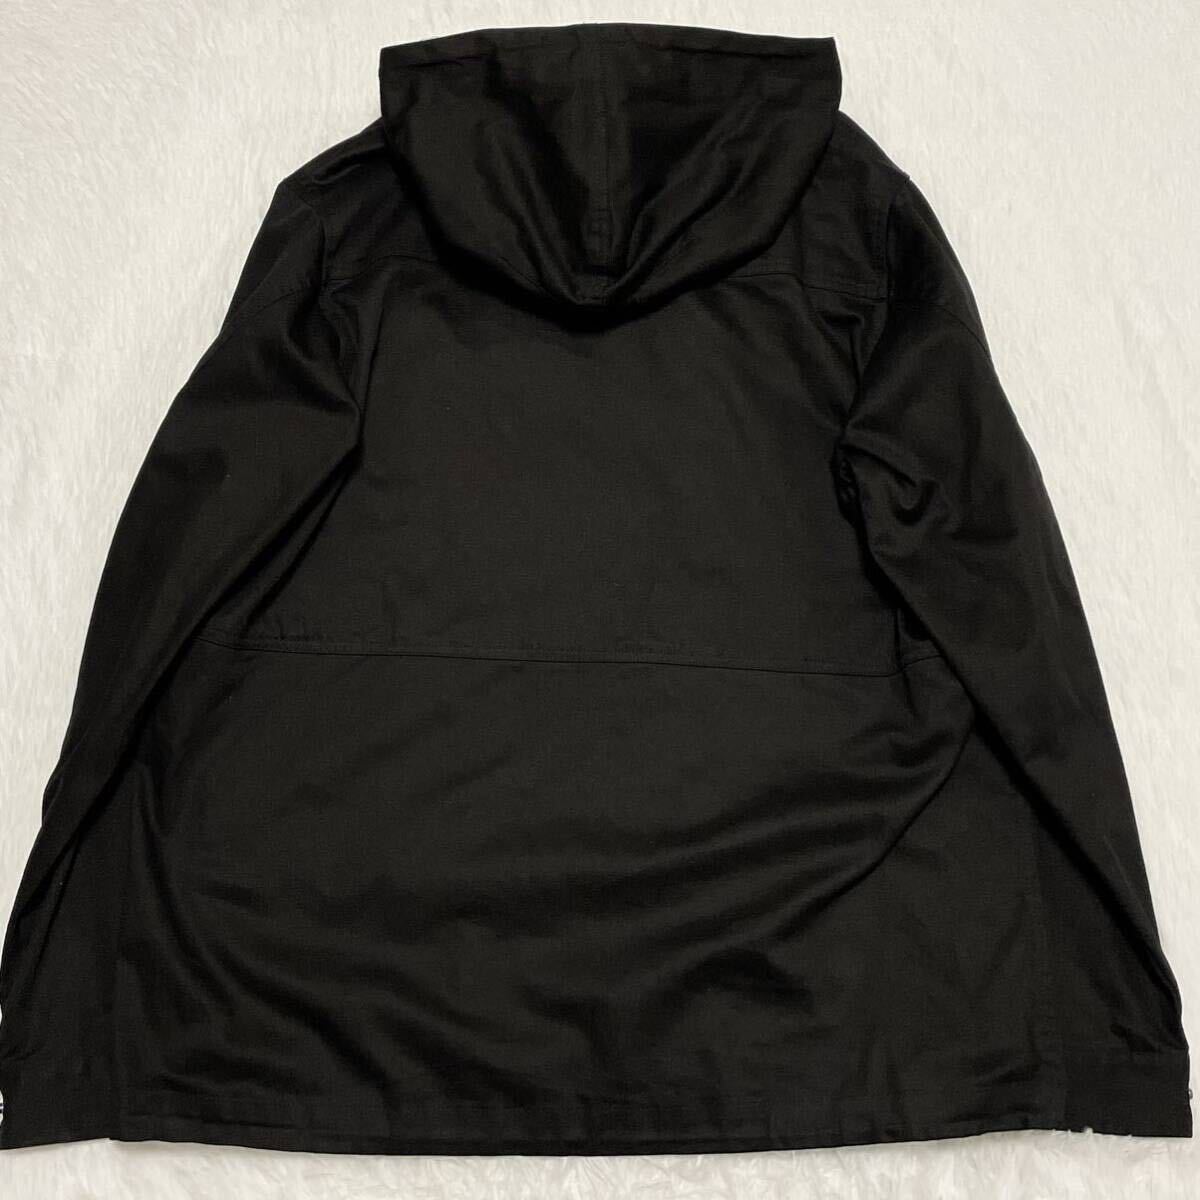  ultra rare XL* FTC mountain parka Zip up black black cotton check blouson jacket Logo USA men's 3844